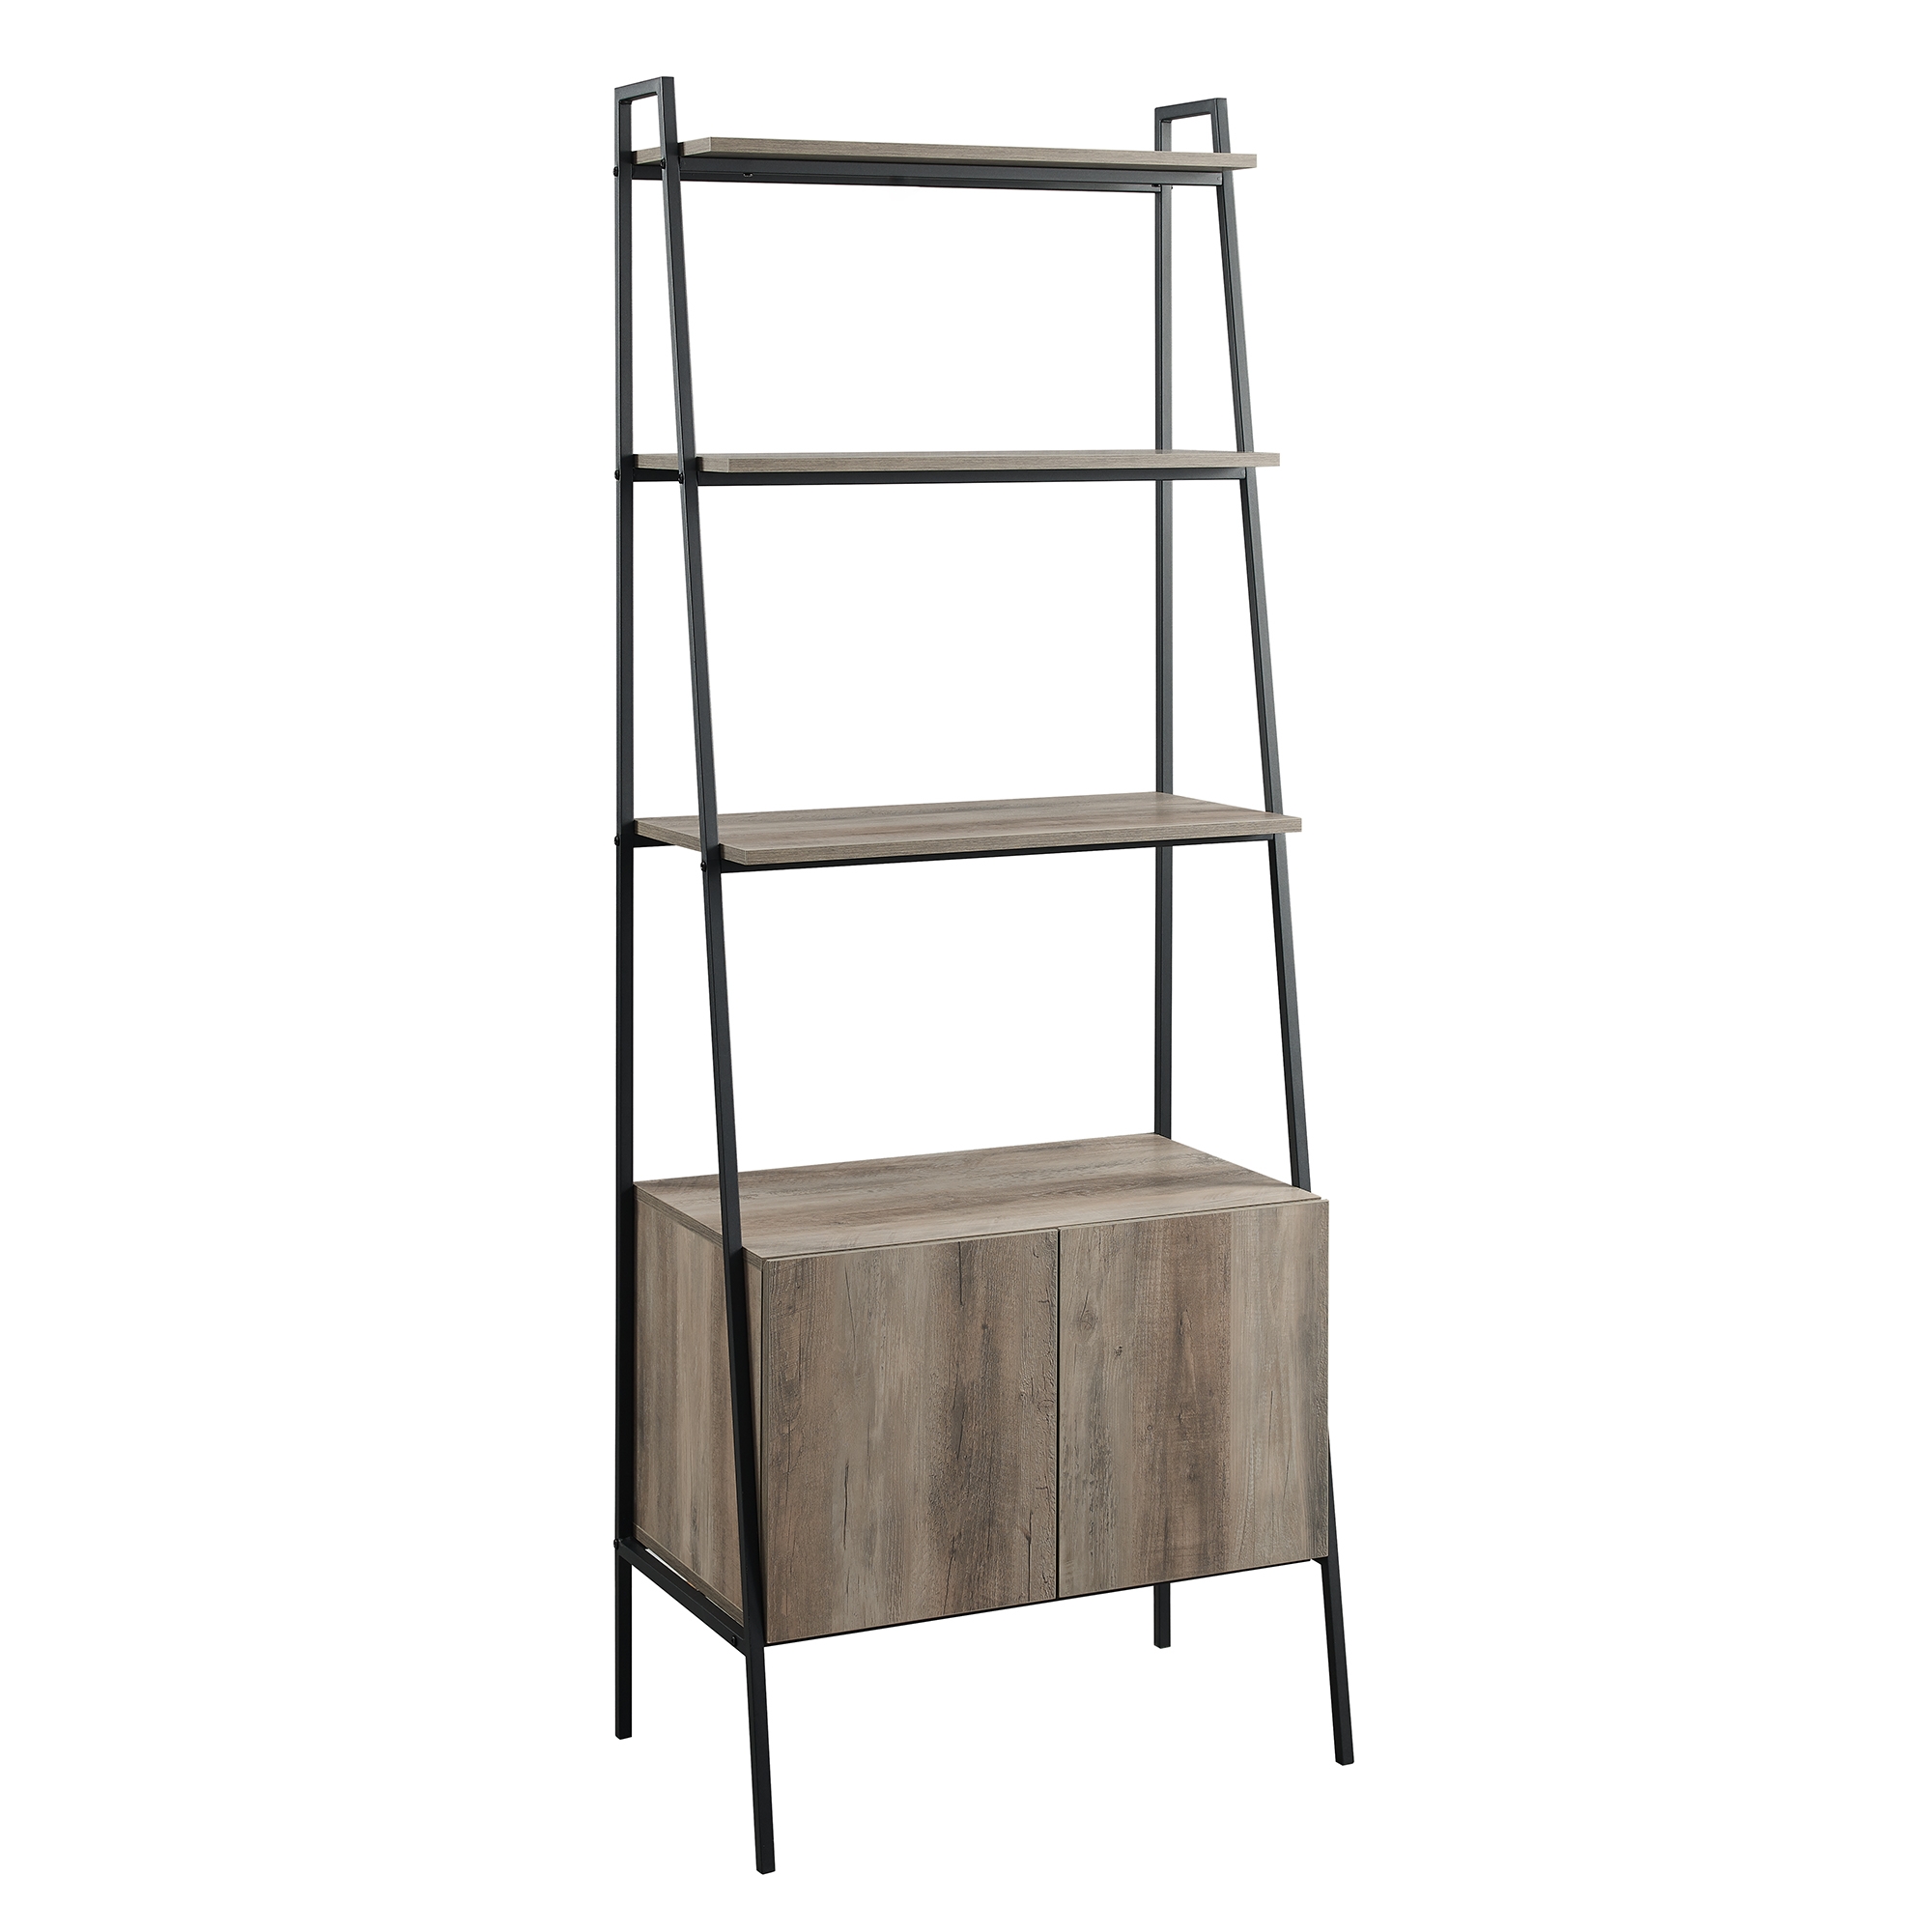 Arlo 72" Industrial Modern Ladder Shelf with Cabinet - Grey Wash - Image 1